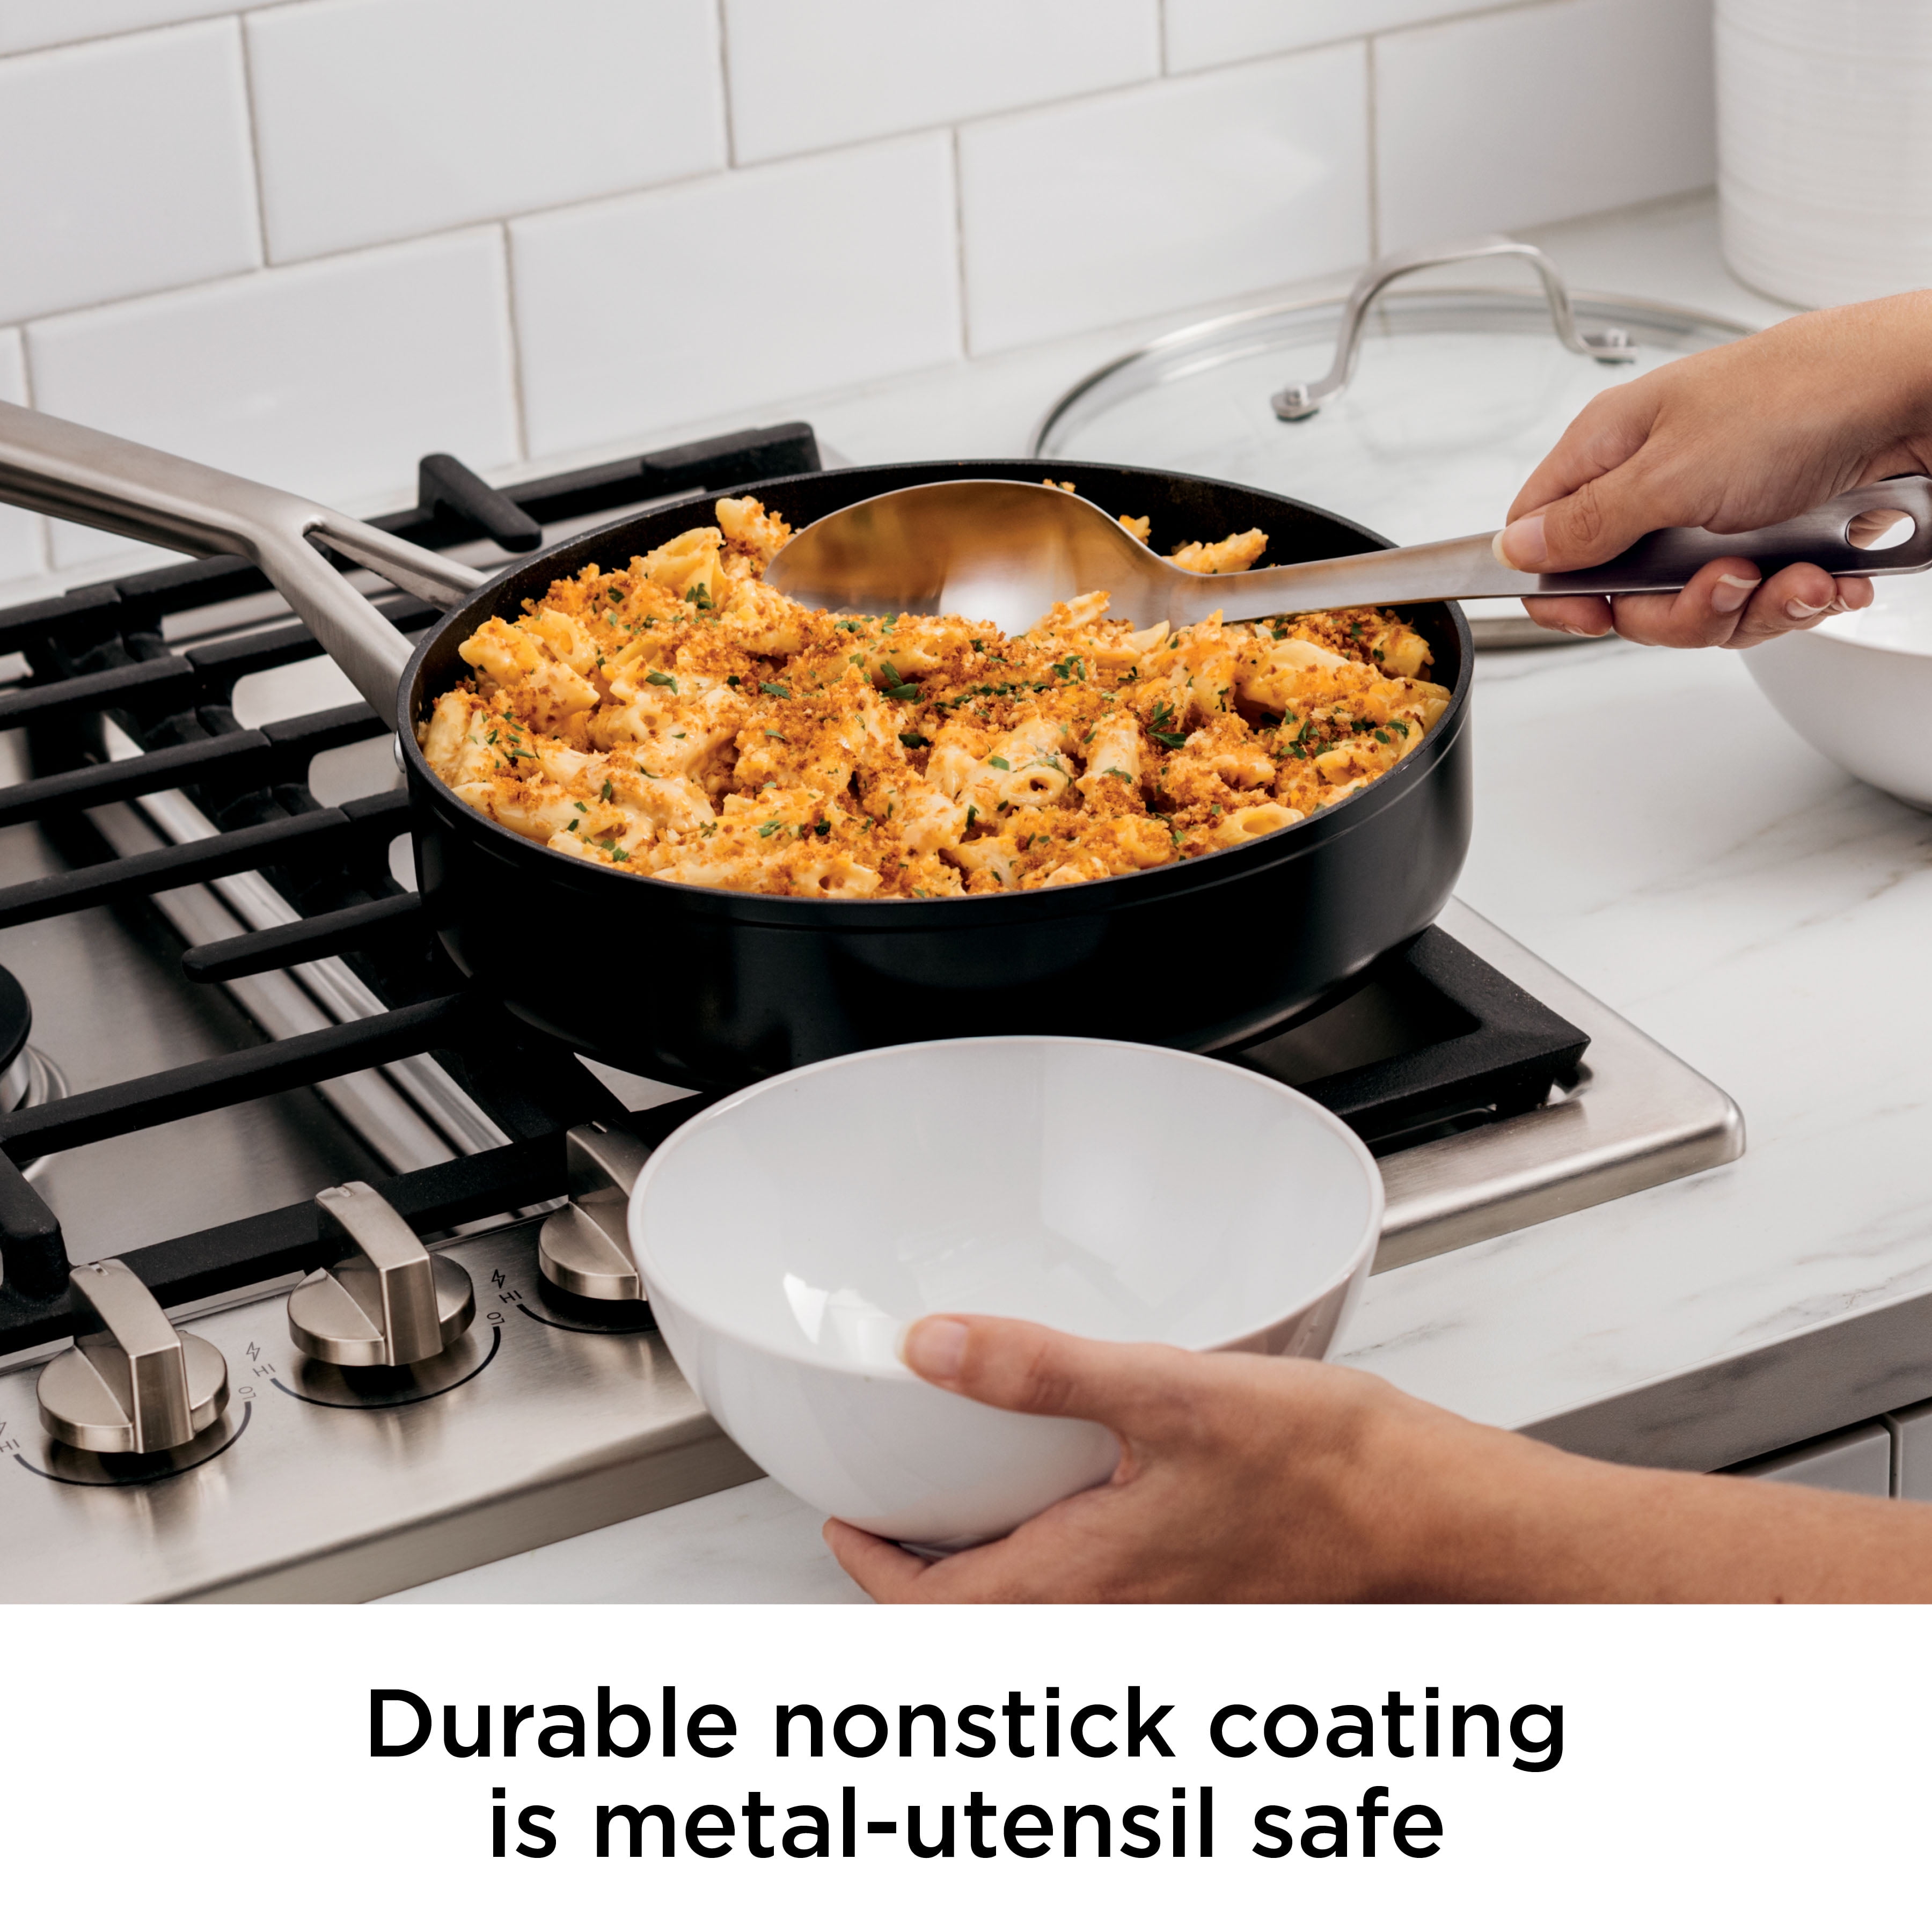  Ninja C33000 Foodi NeverStick Premium 3-Piece Cookware Set, 12-Inch  Fry Pan, 5-Quart Sauté Pan with Glass Lid, Hard-Anodized, Nonstick, Durable  & Oven Safe to 500°F, Slate Grey: Home & Kitchen